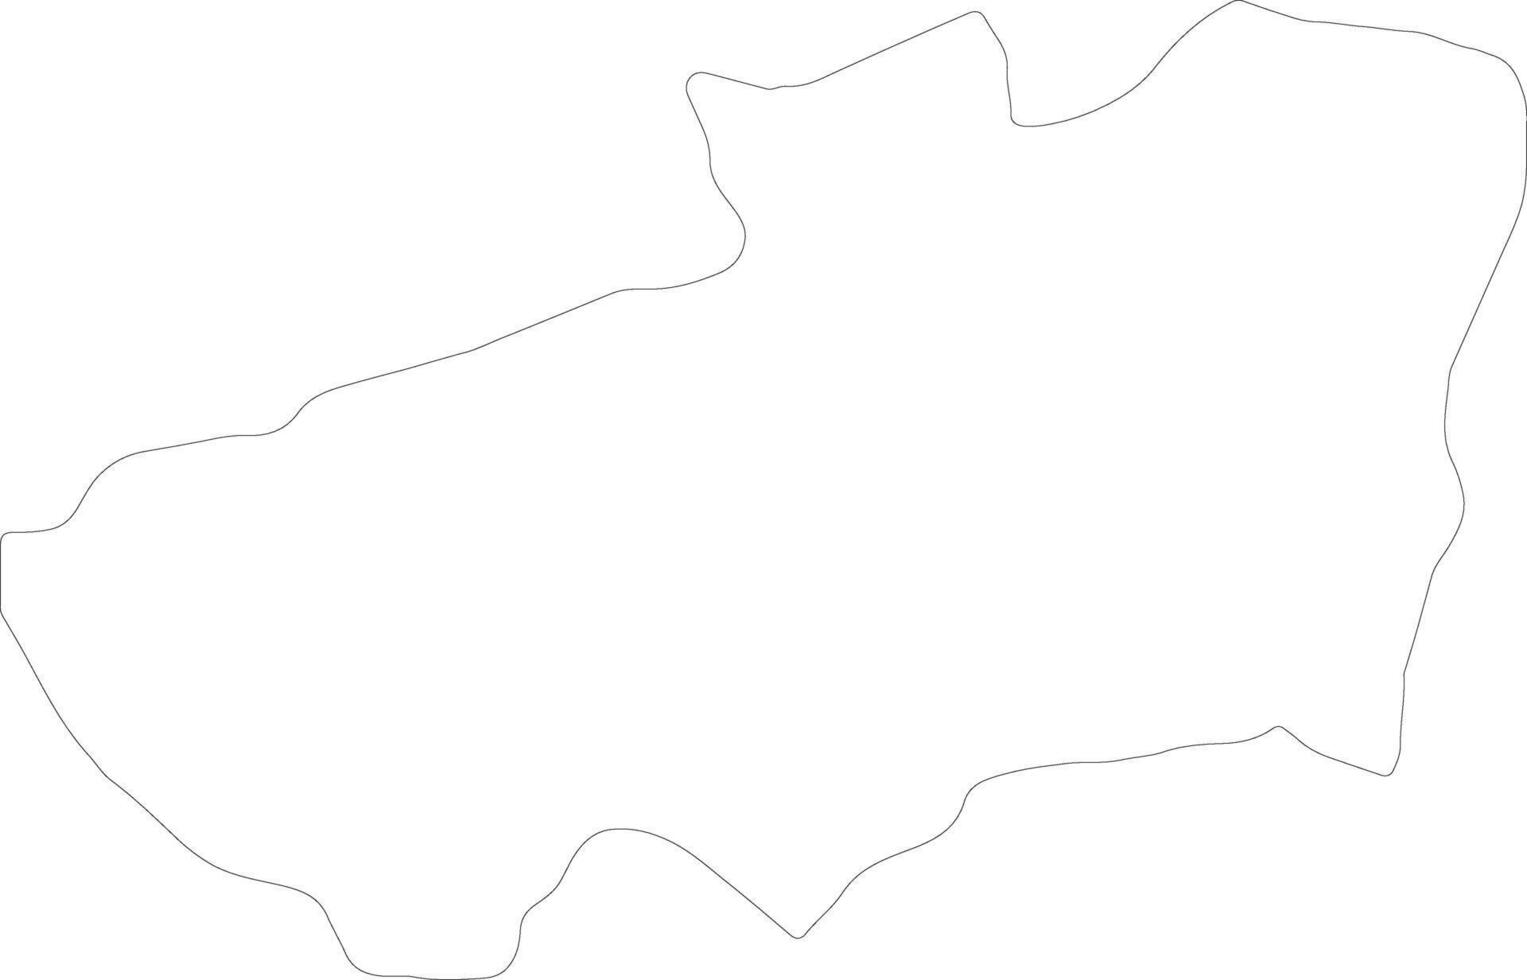 Souk Ahras Algeria outline map vector